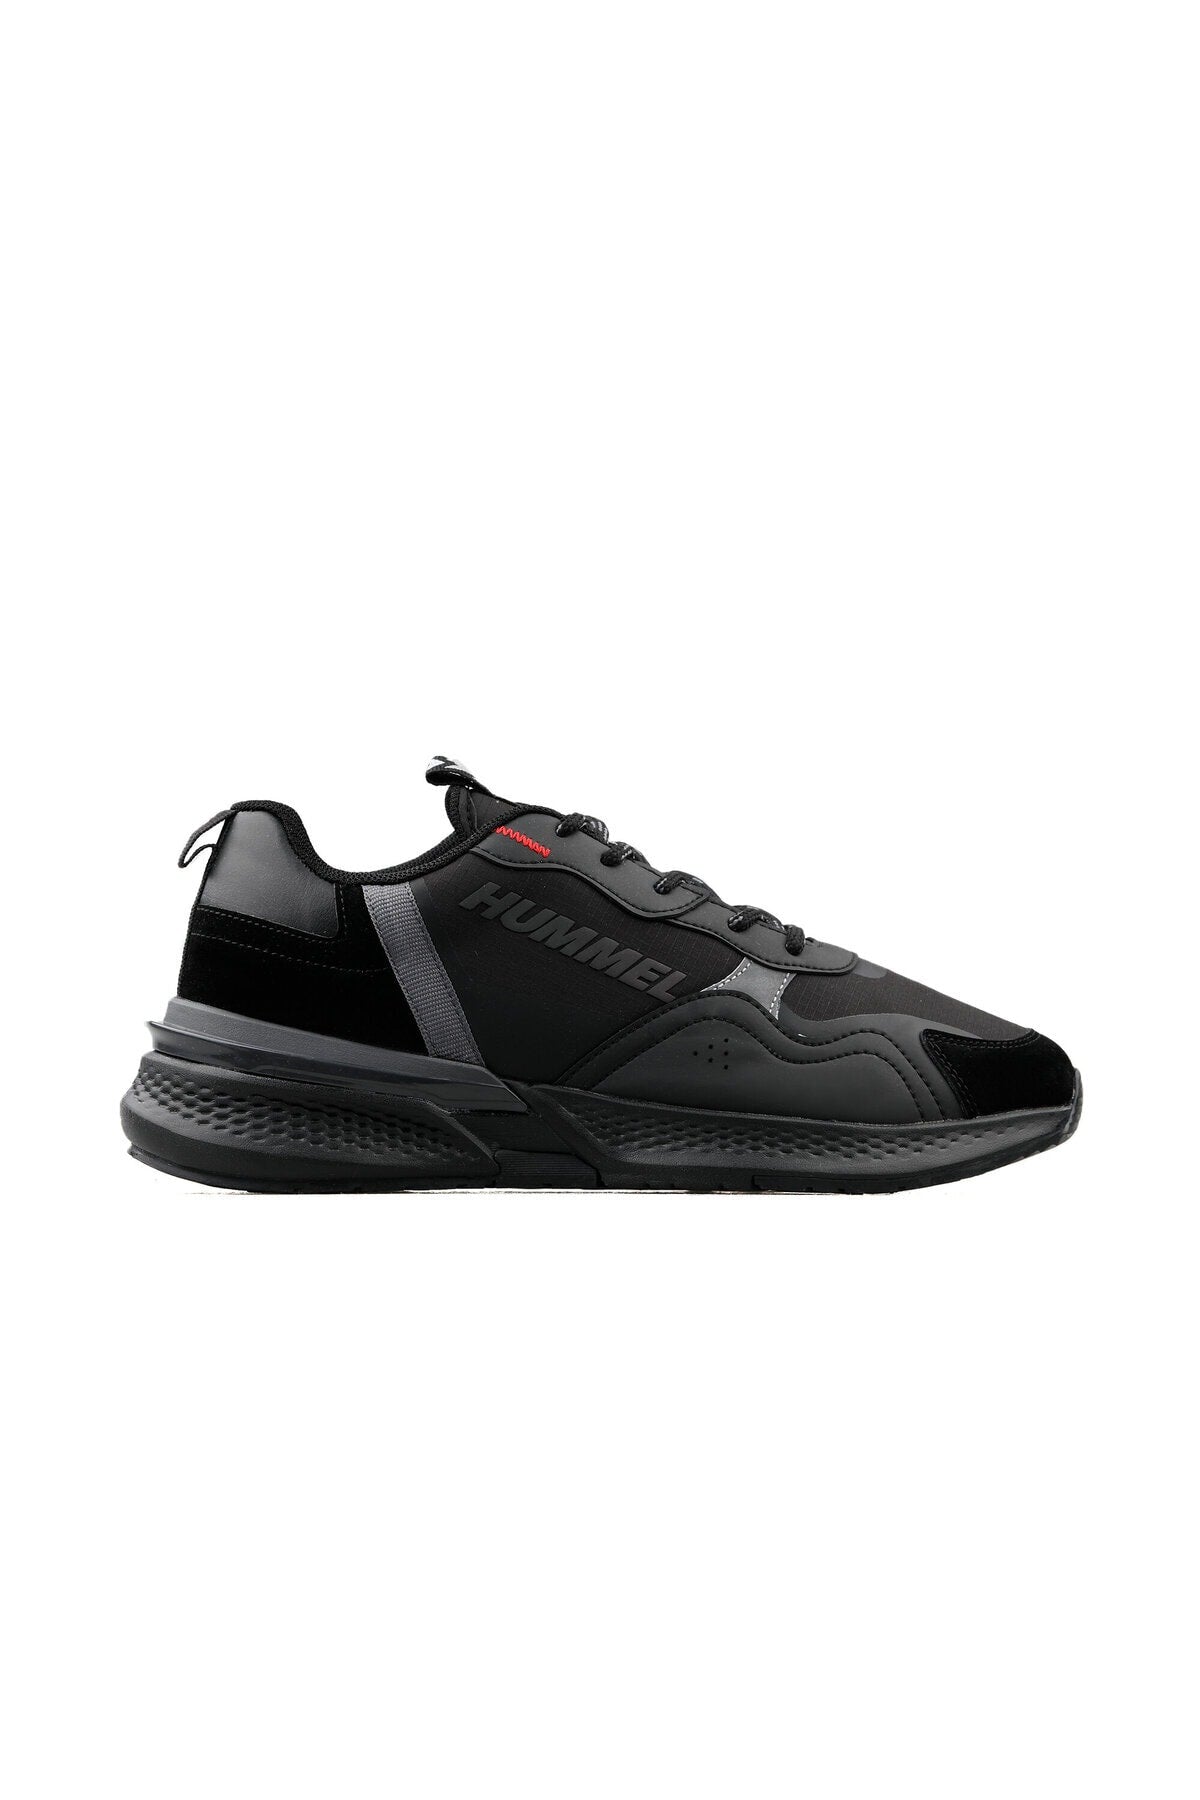 Joker Men's Casual Shoes 900316-3081 Black